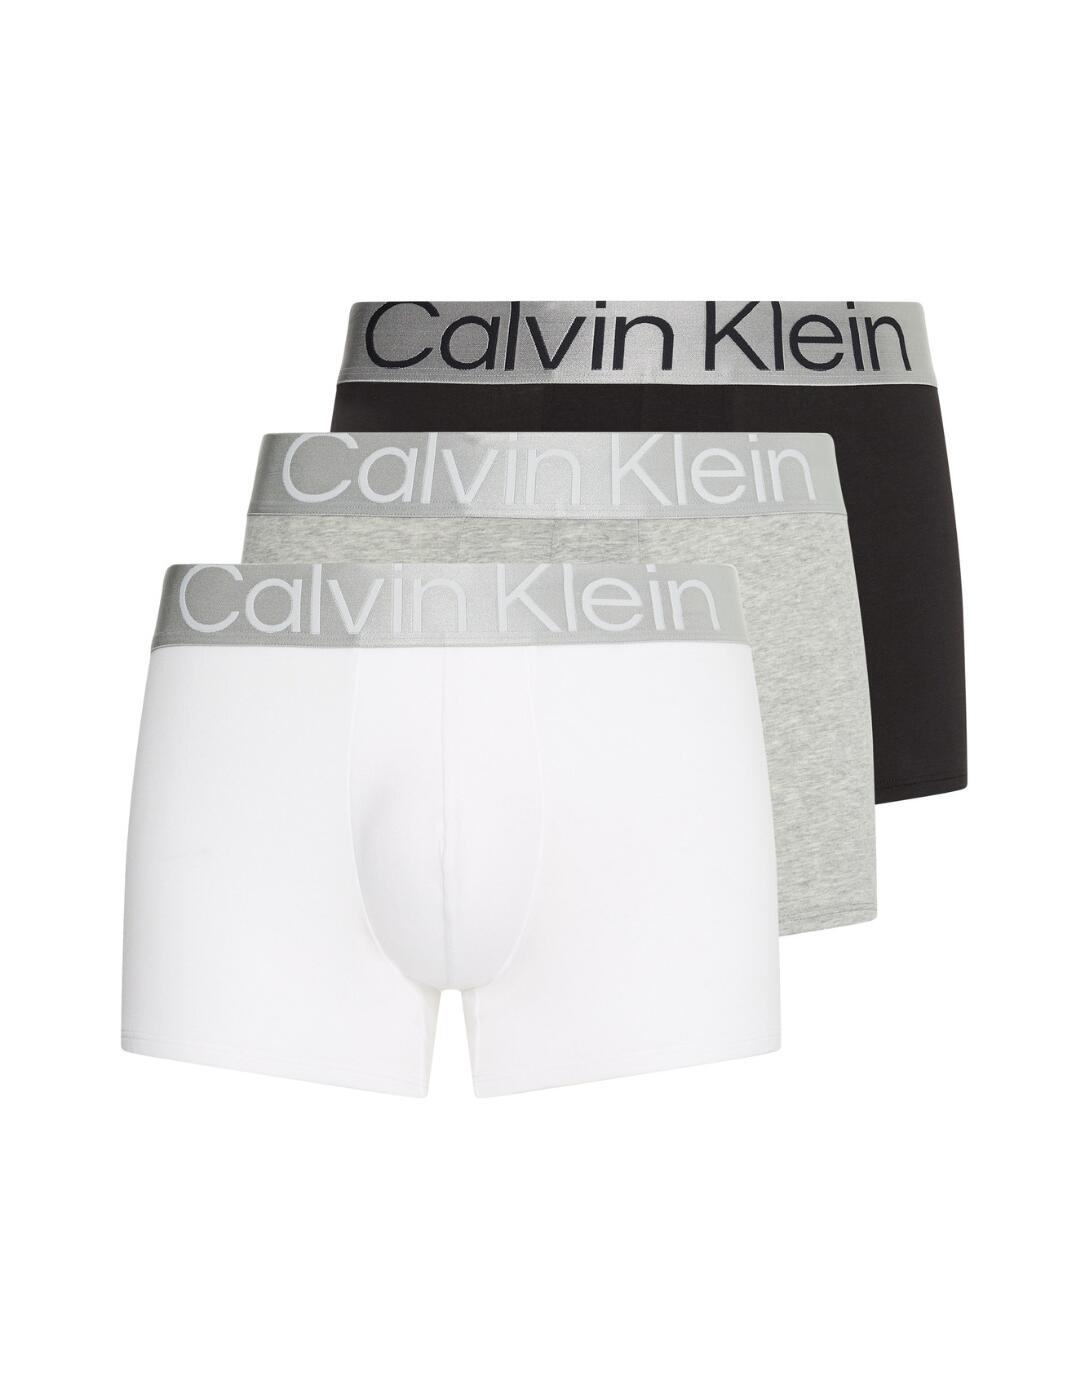 CALVIN KLEIN MENS 3 PACK TRUNKS BLACK WHITE GREY HEATHER – Designer Outlet  Sales